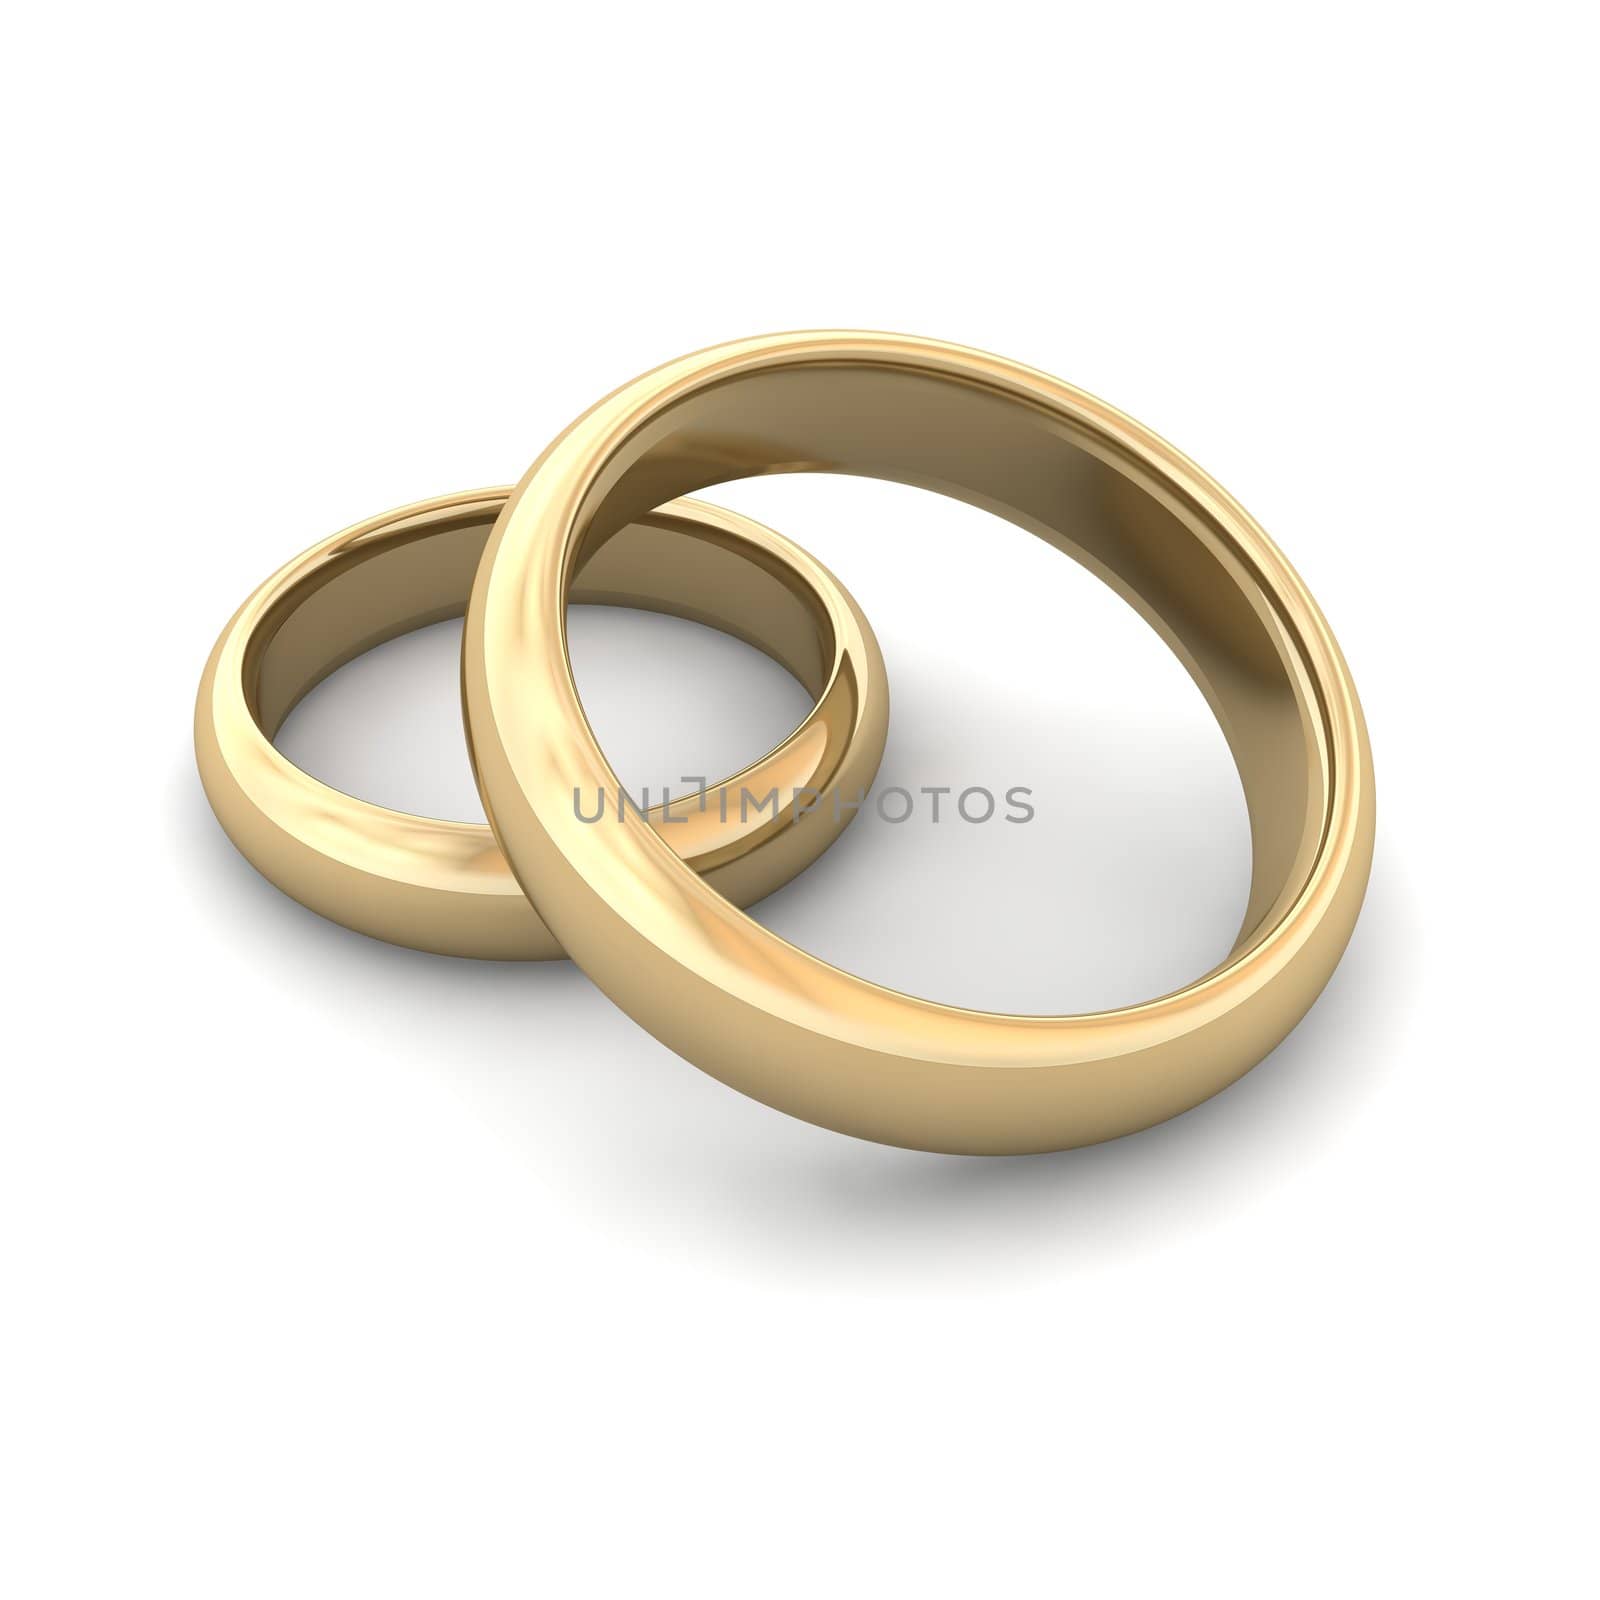 Golden wedding rings by skvoor